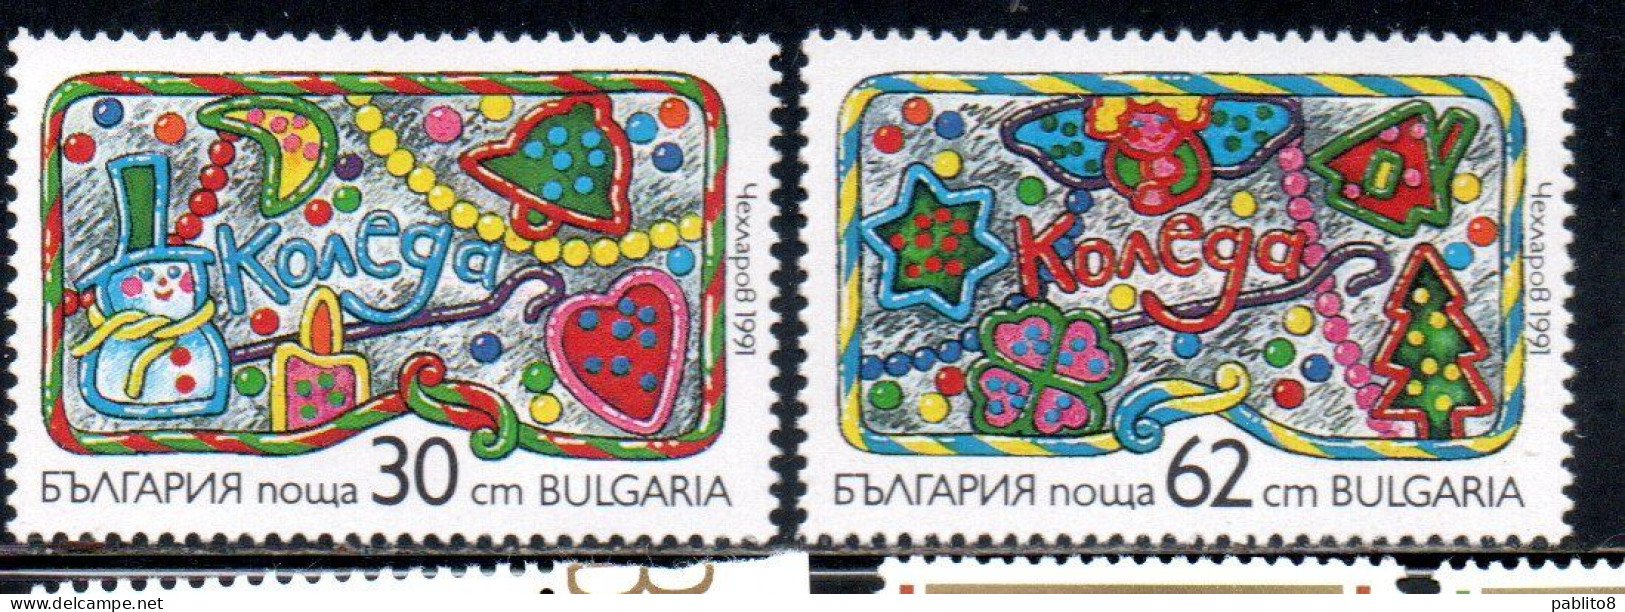 BULGARIA BULGARIE BULGARIEN 1991 CHRISTMAS NATALE NOEL WEIHNACHTEN NAVIDAD COMPLETE SET SERIE COMPLETA MNH - Nuovi